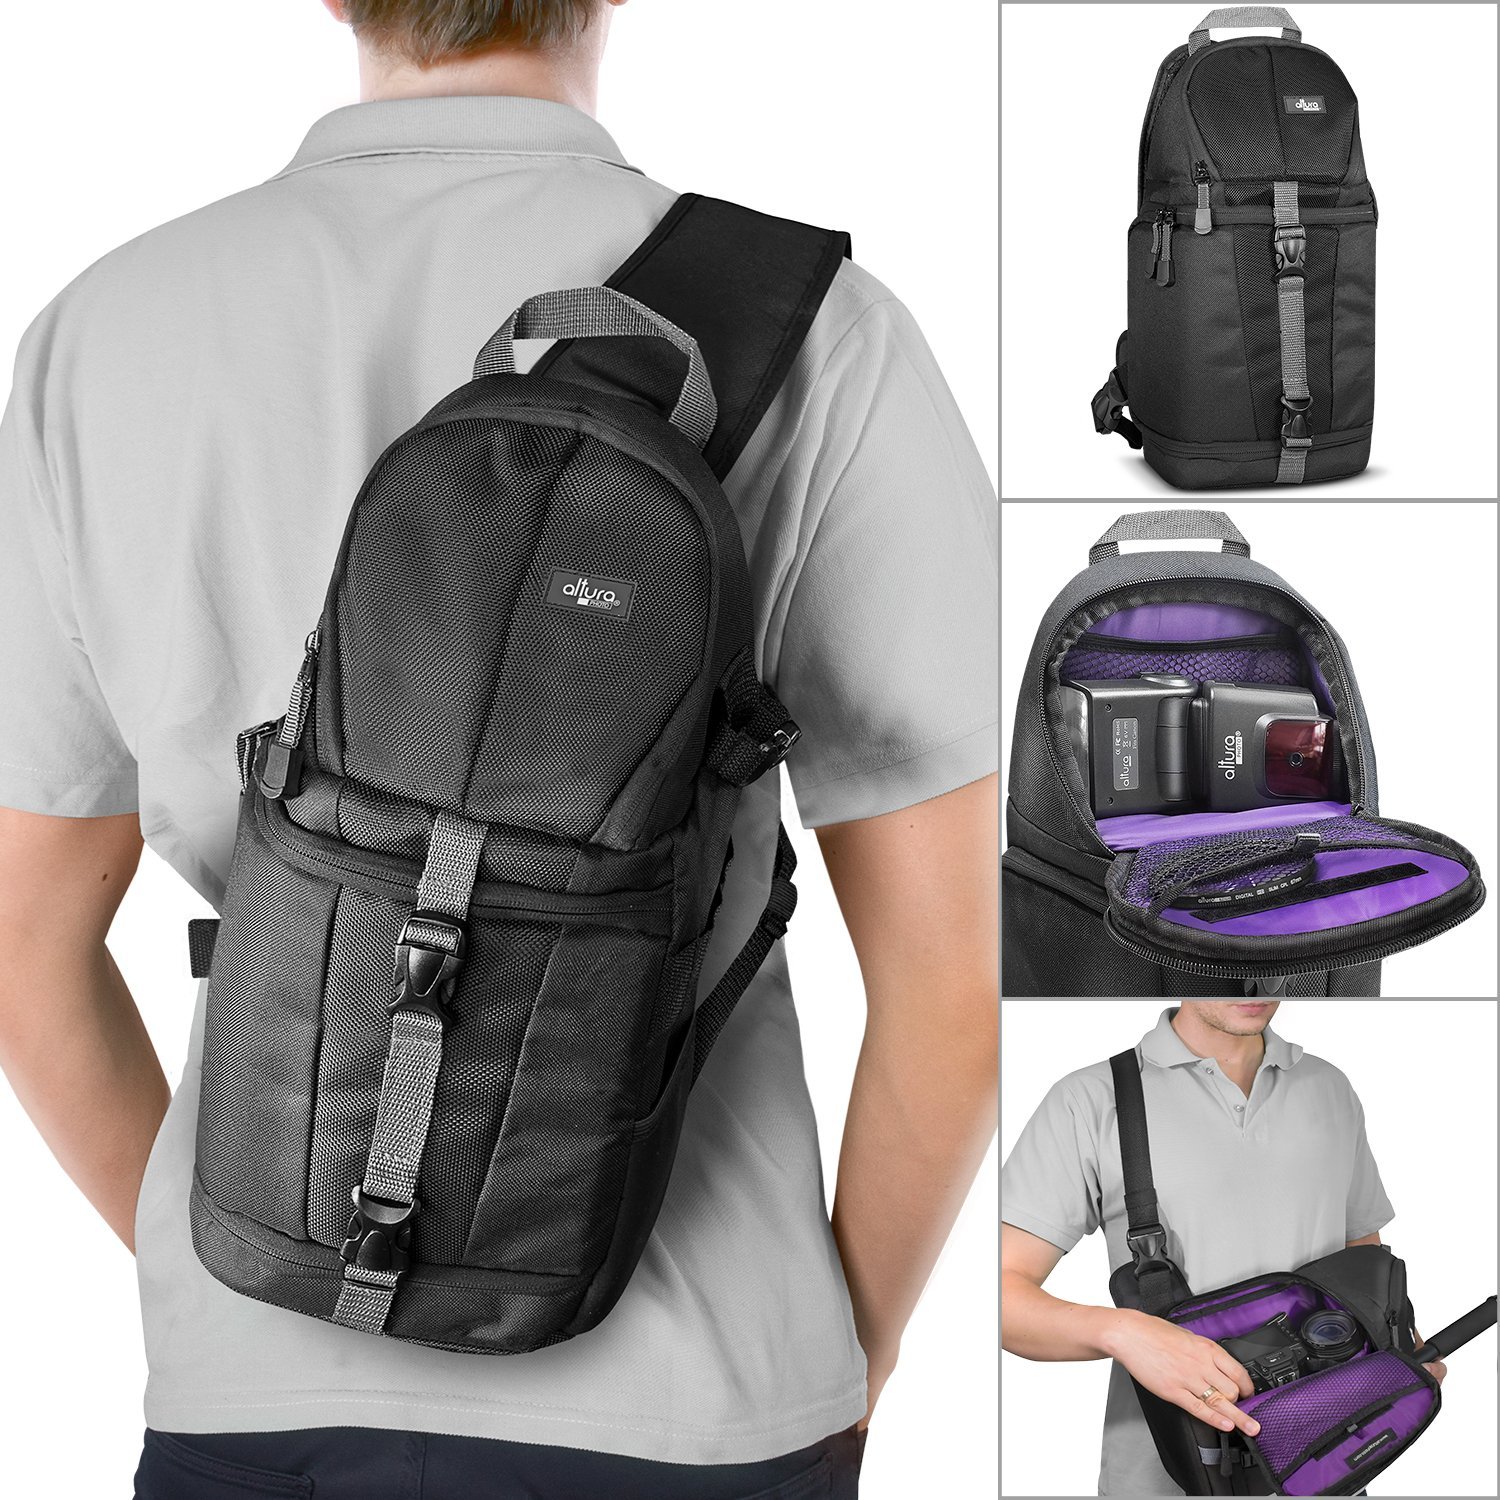 mirrorless backpack